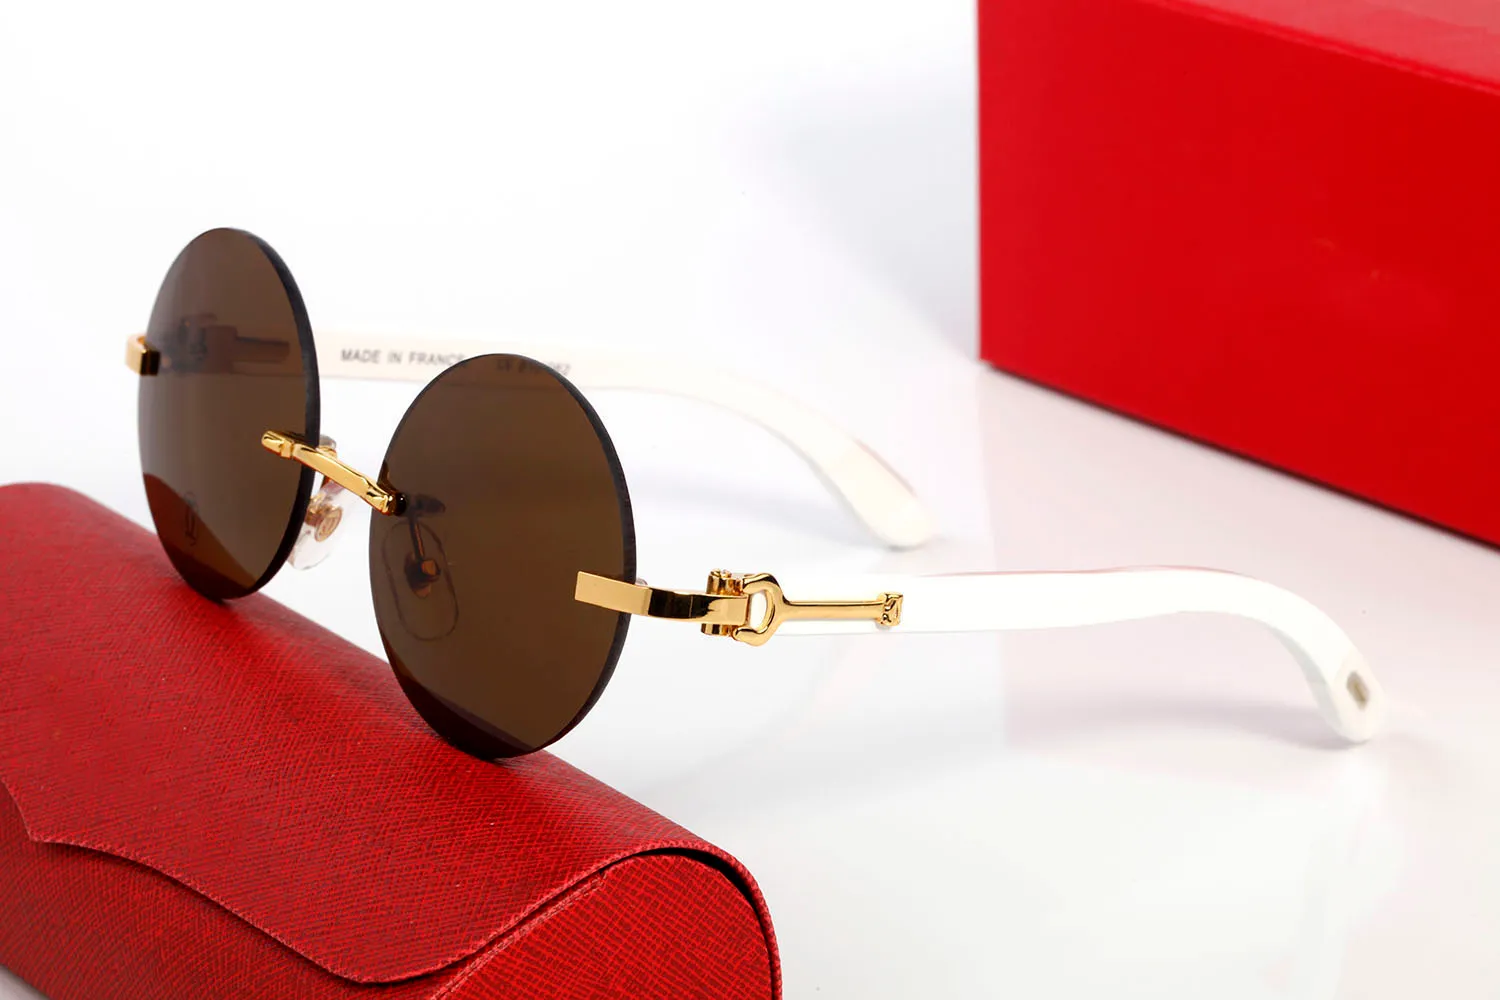 1 pcs designer novo clássico redondo óculos de sol moda mulheres óculos de sol UV400 ouro moldura arborizada marrom preto lentes claras mens óculos